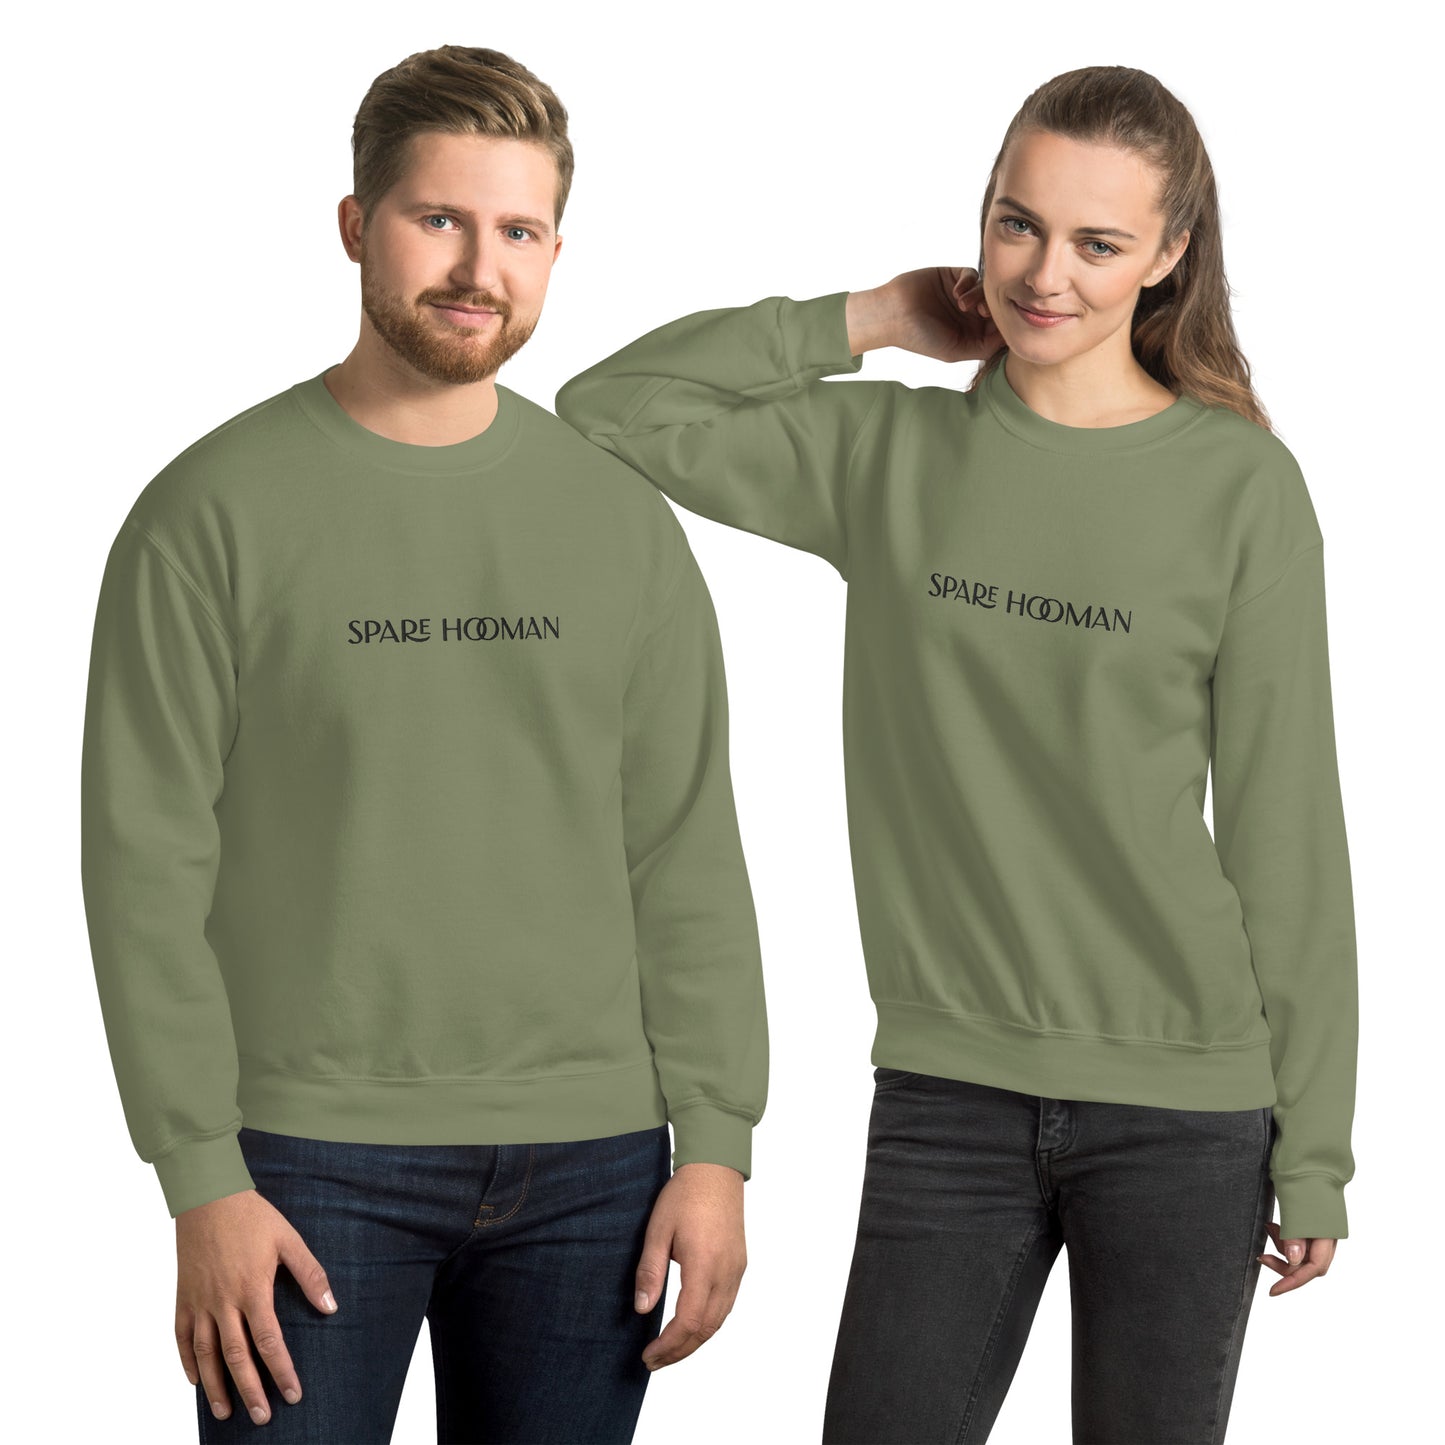 The Spare Hooman Unisex Sweatshirt